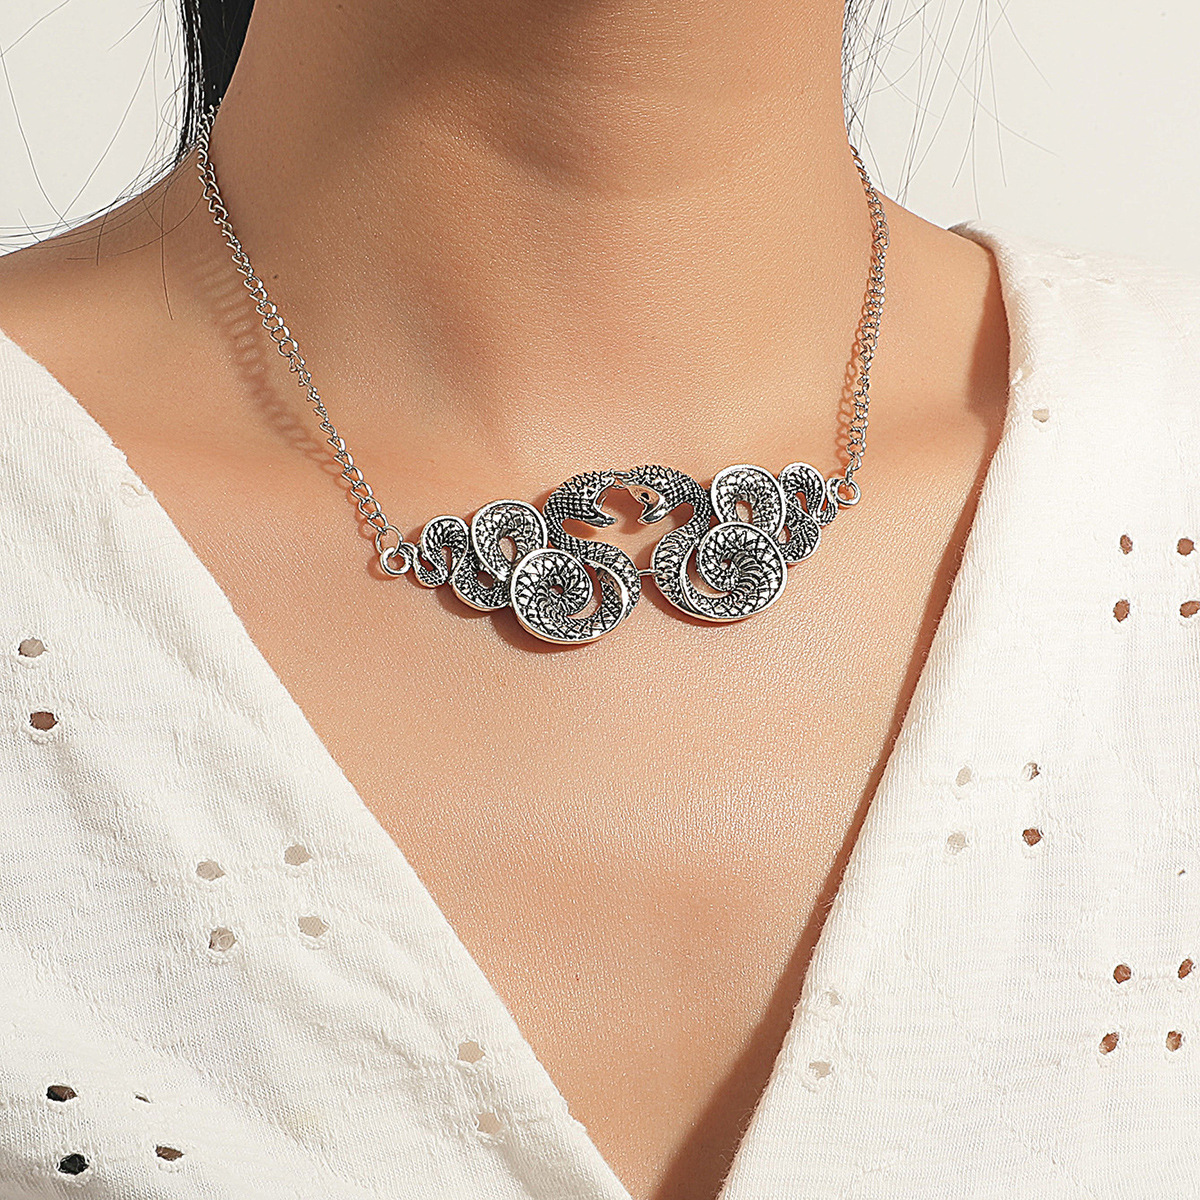 Winding snake pendant necklace